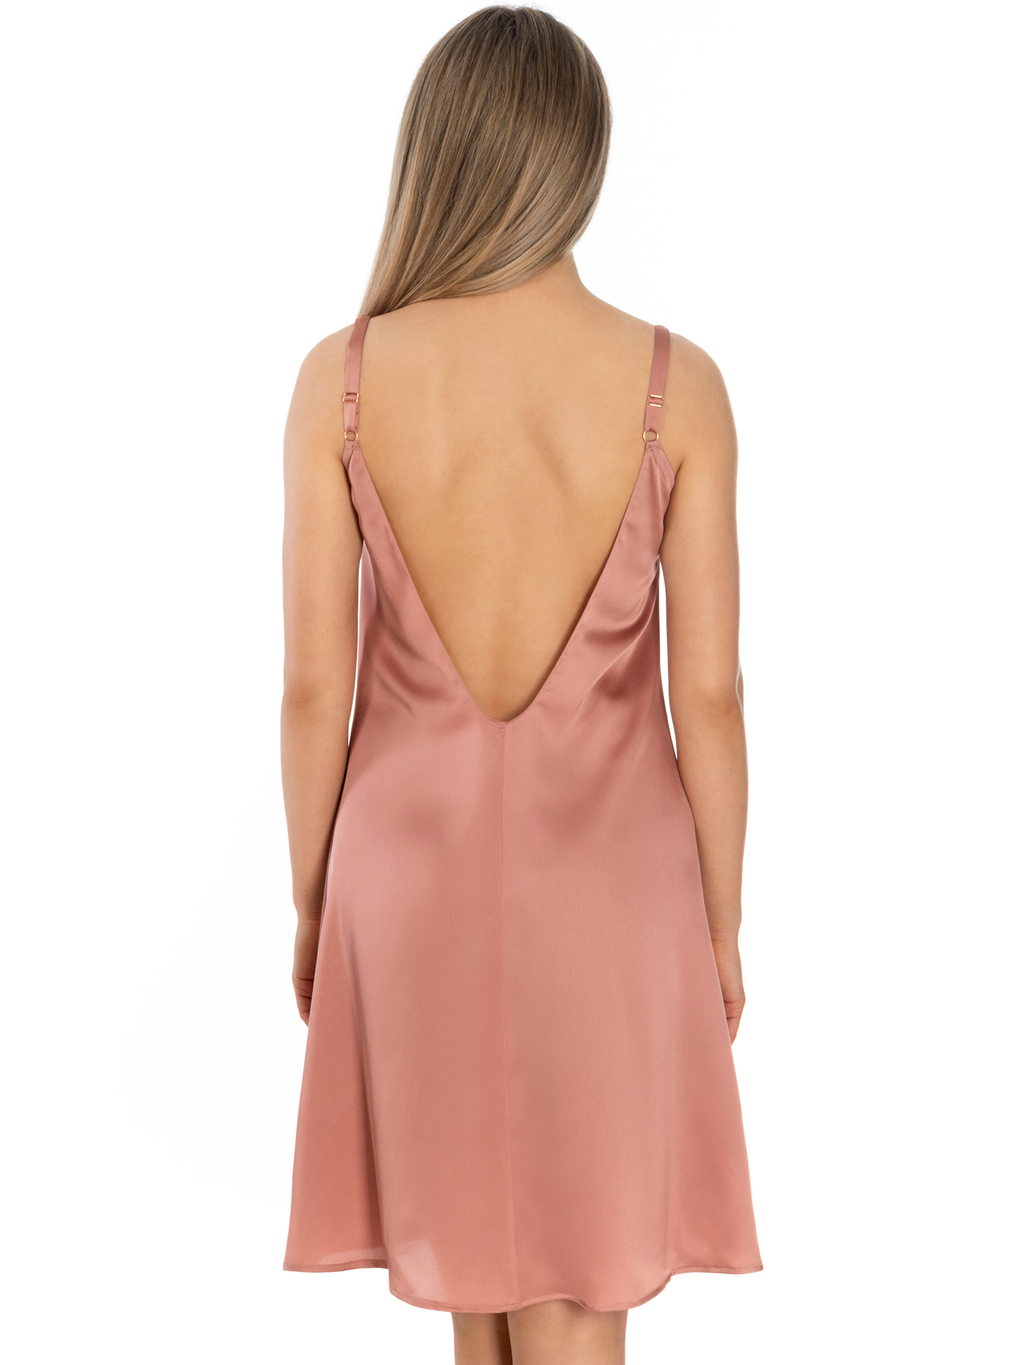 Lauma, Hazy Pink Satin Nigt Dress, On Model Back, 97K90